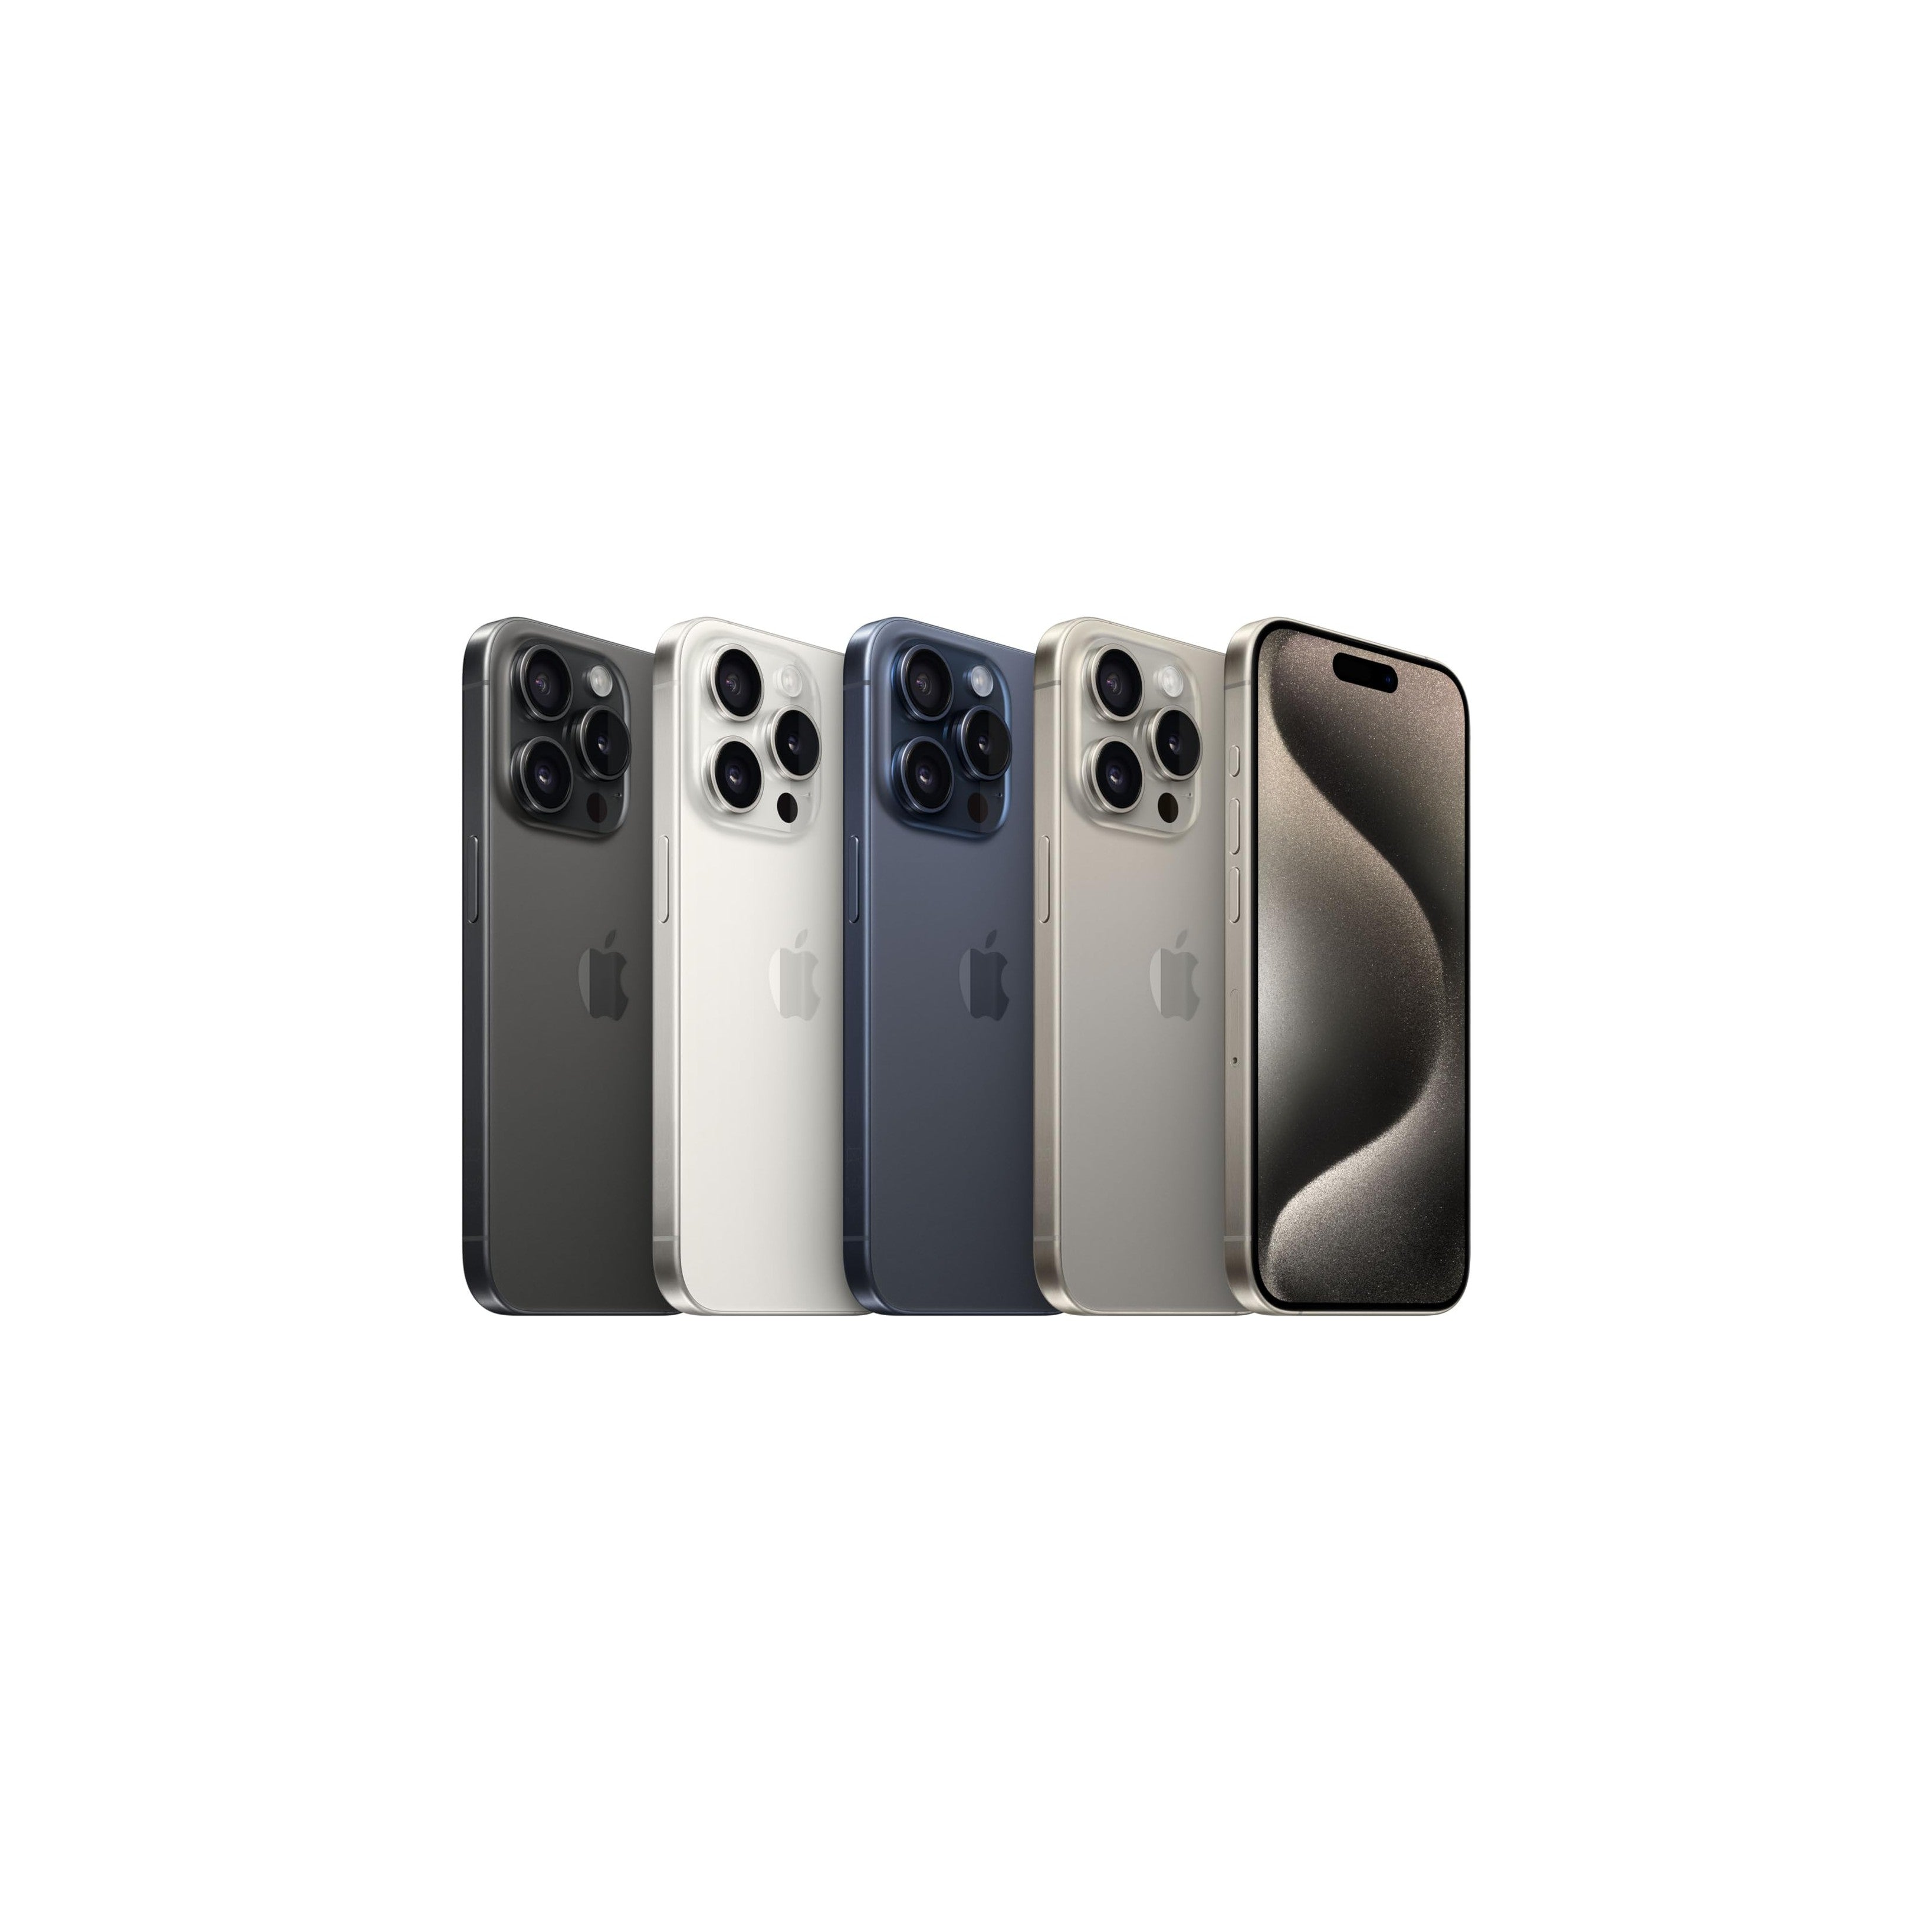 Apple iPhone 15 Pro (1 TB) - Titanio bianco-iStoreMilano